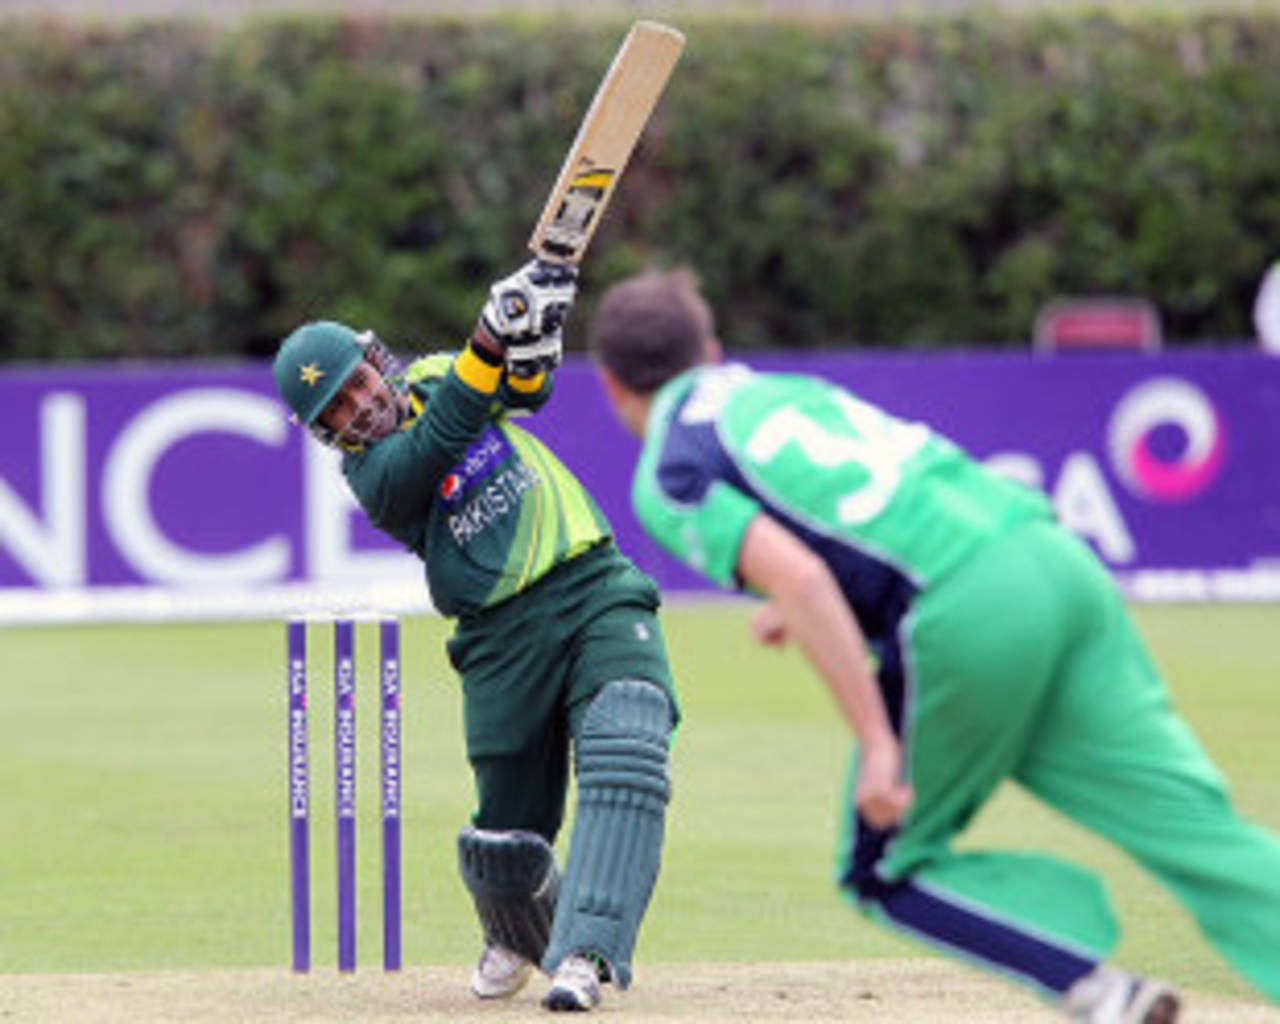 Asad Shafiq hits a shot over the top, Ireland v Pakistan, 1st ODI, Dublin, May 23, 2013